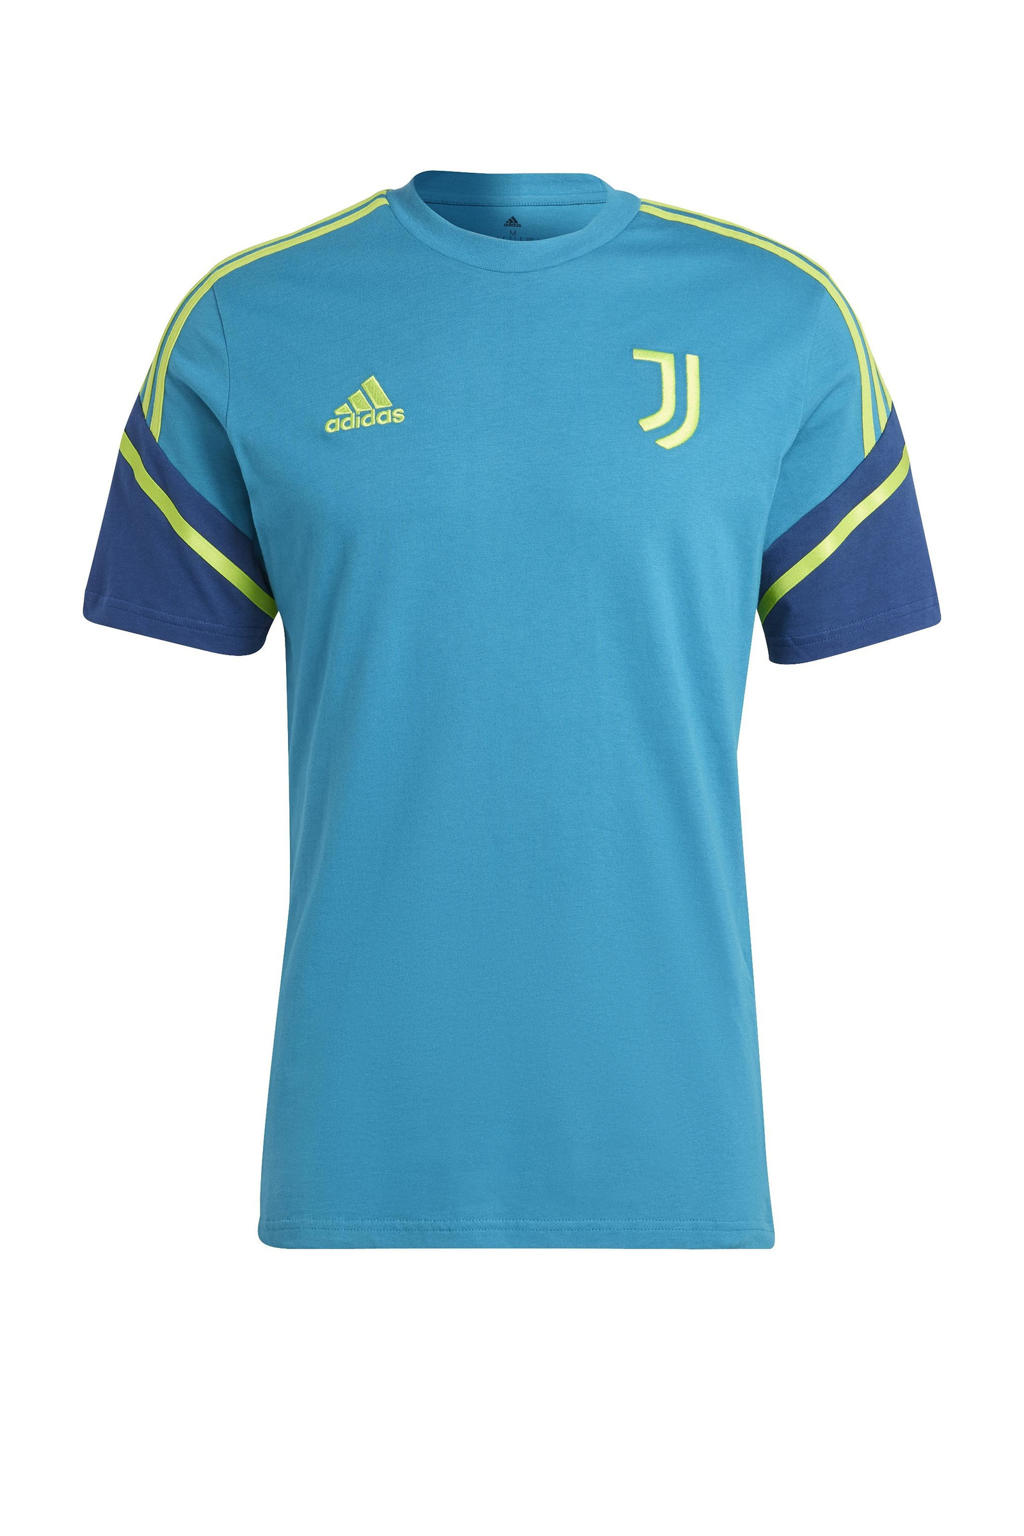 adidas Performance Senior Juventus FC voetbalshirt training blauw